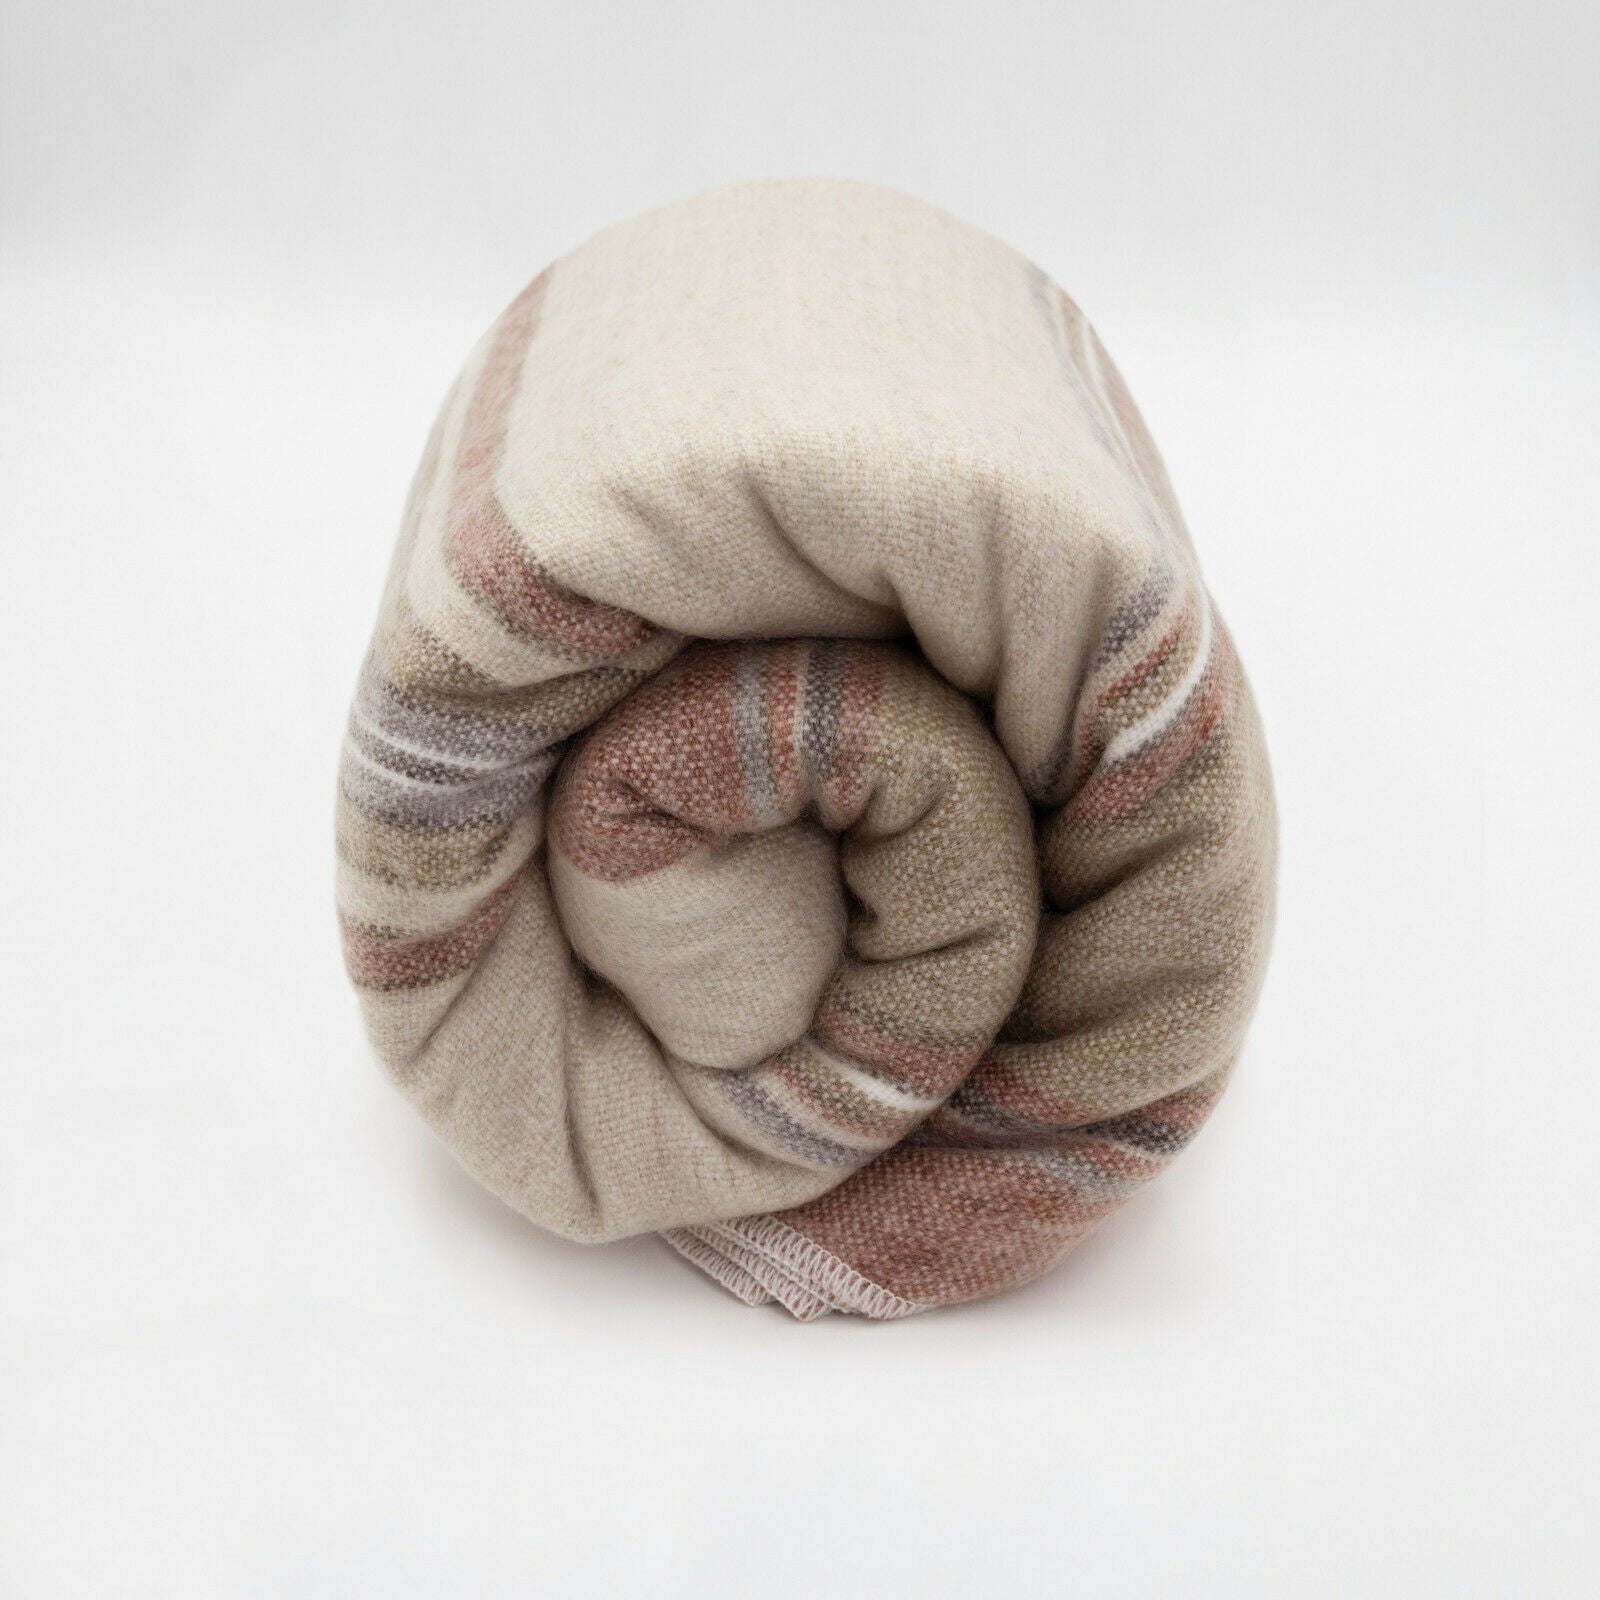 Zhumir - Baby Alpaca Wool Throw Blanket / Sofa Cover - Queen 95" x 66" - earthy stripes pattern